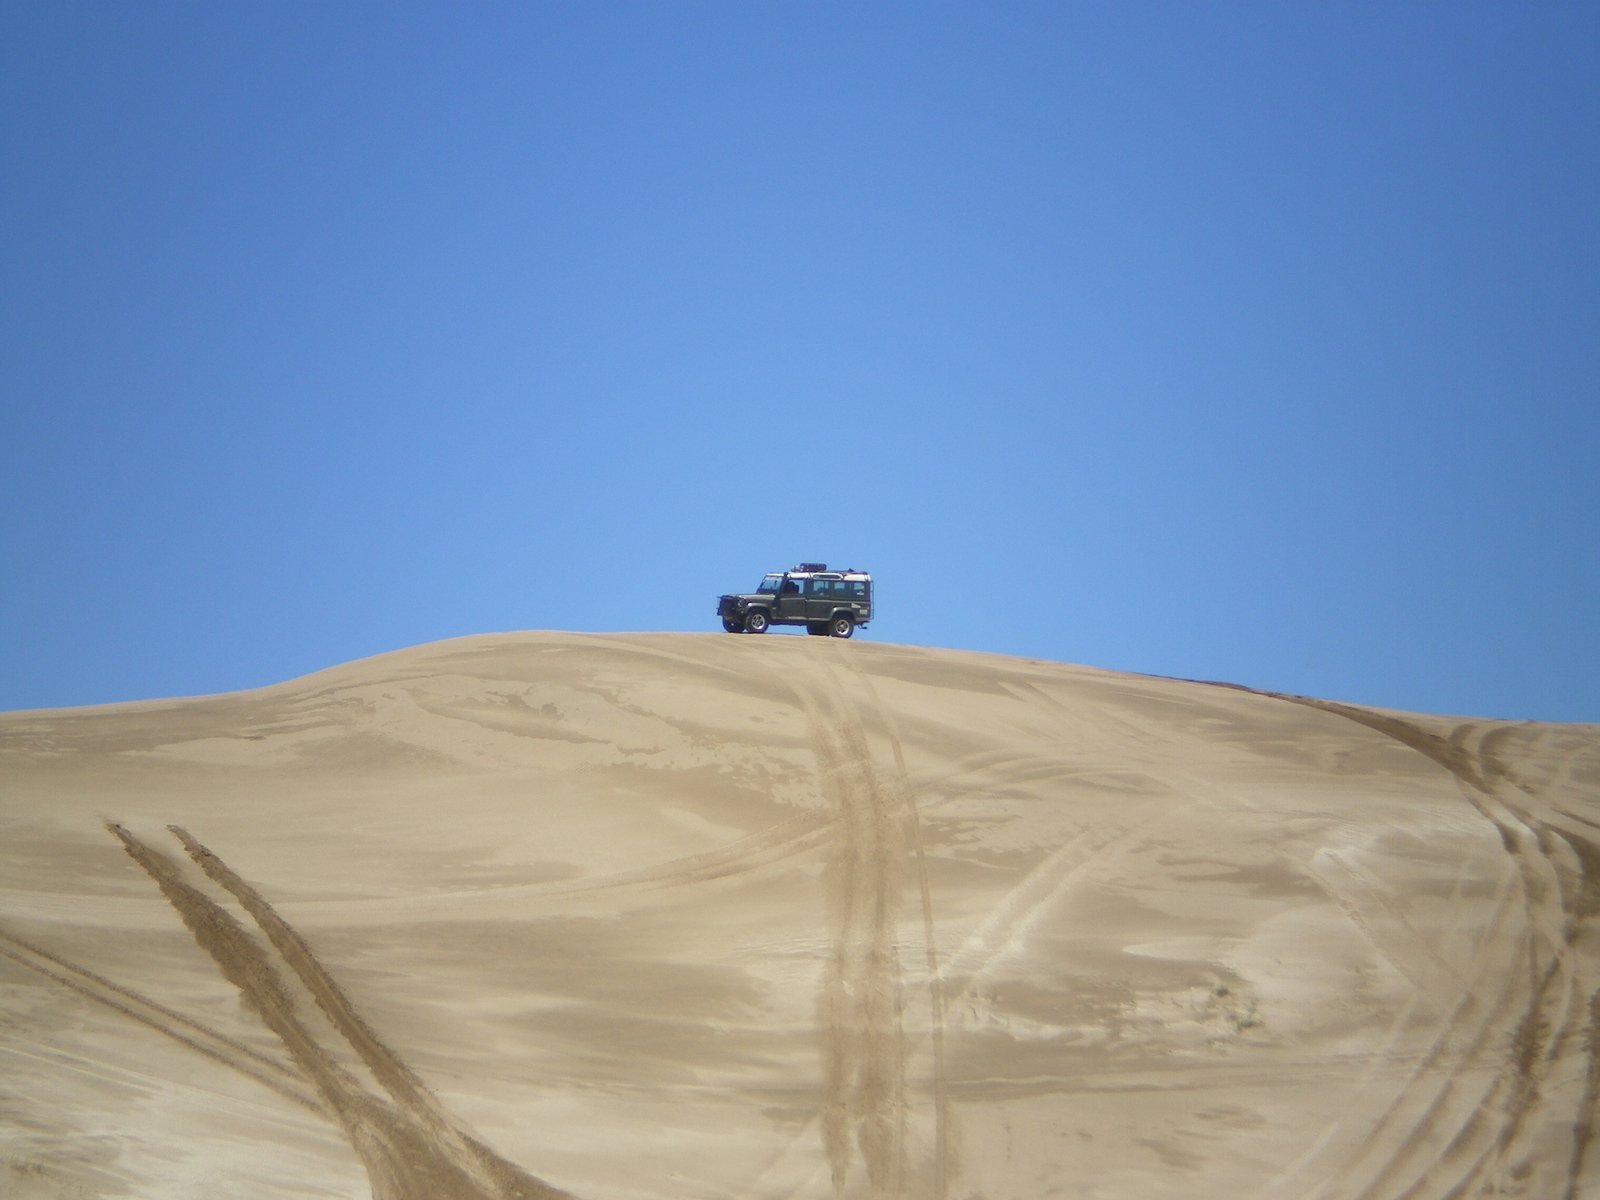 a blue truck driving through the sand dunes